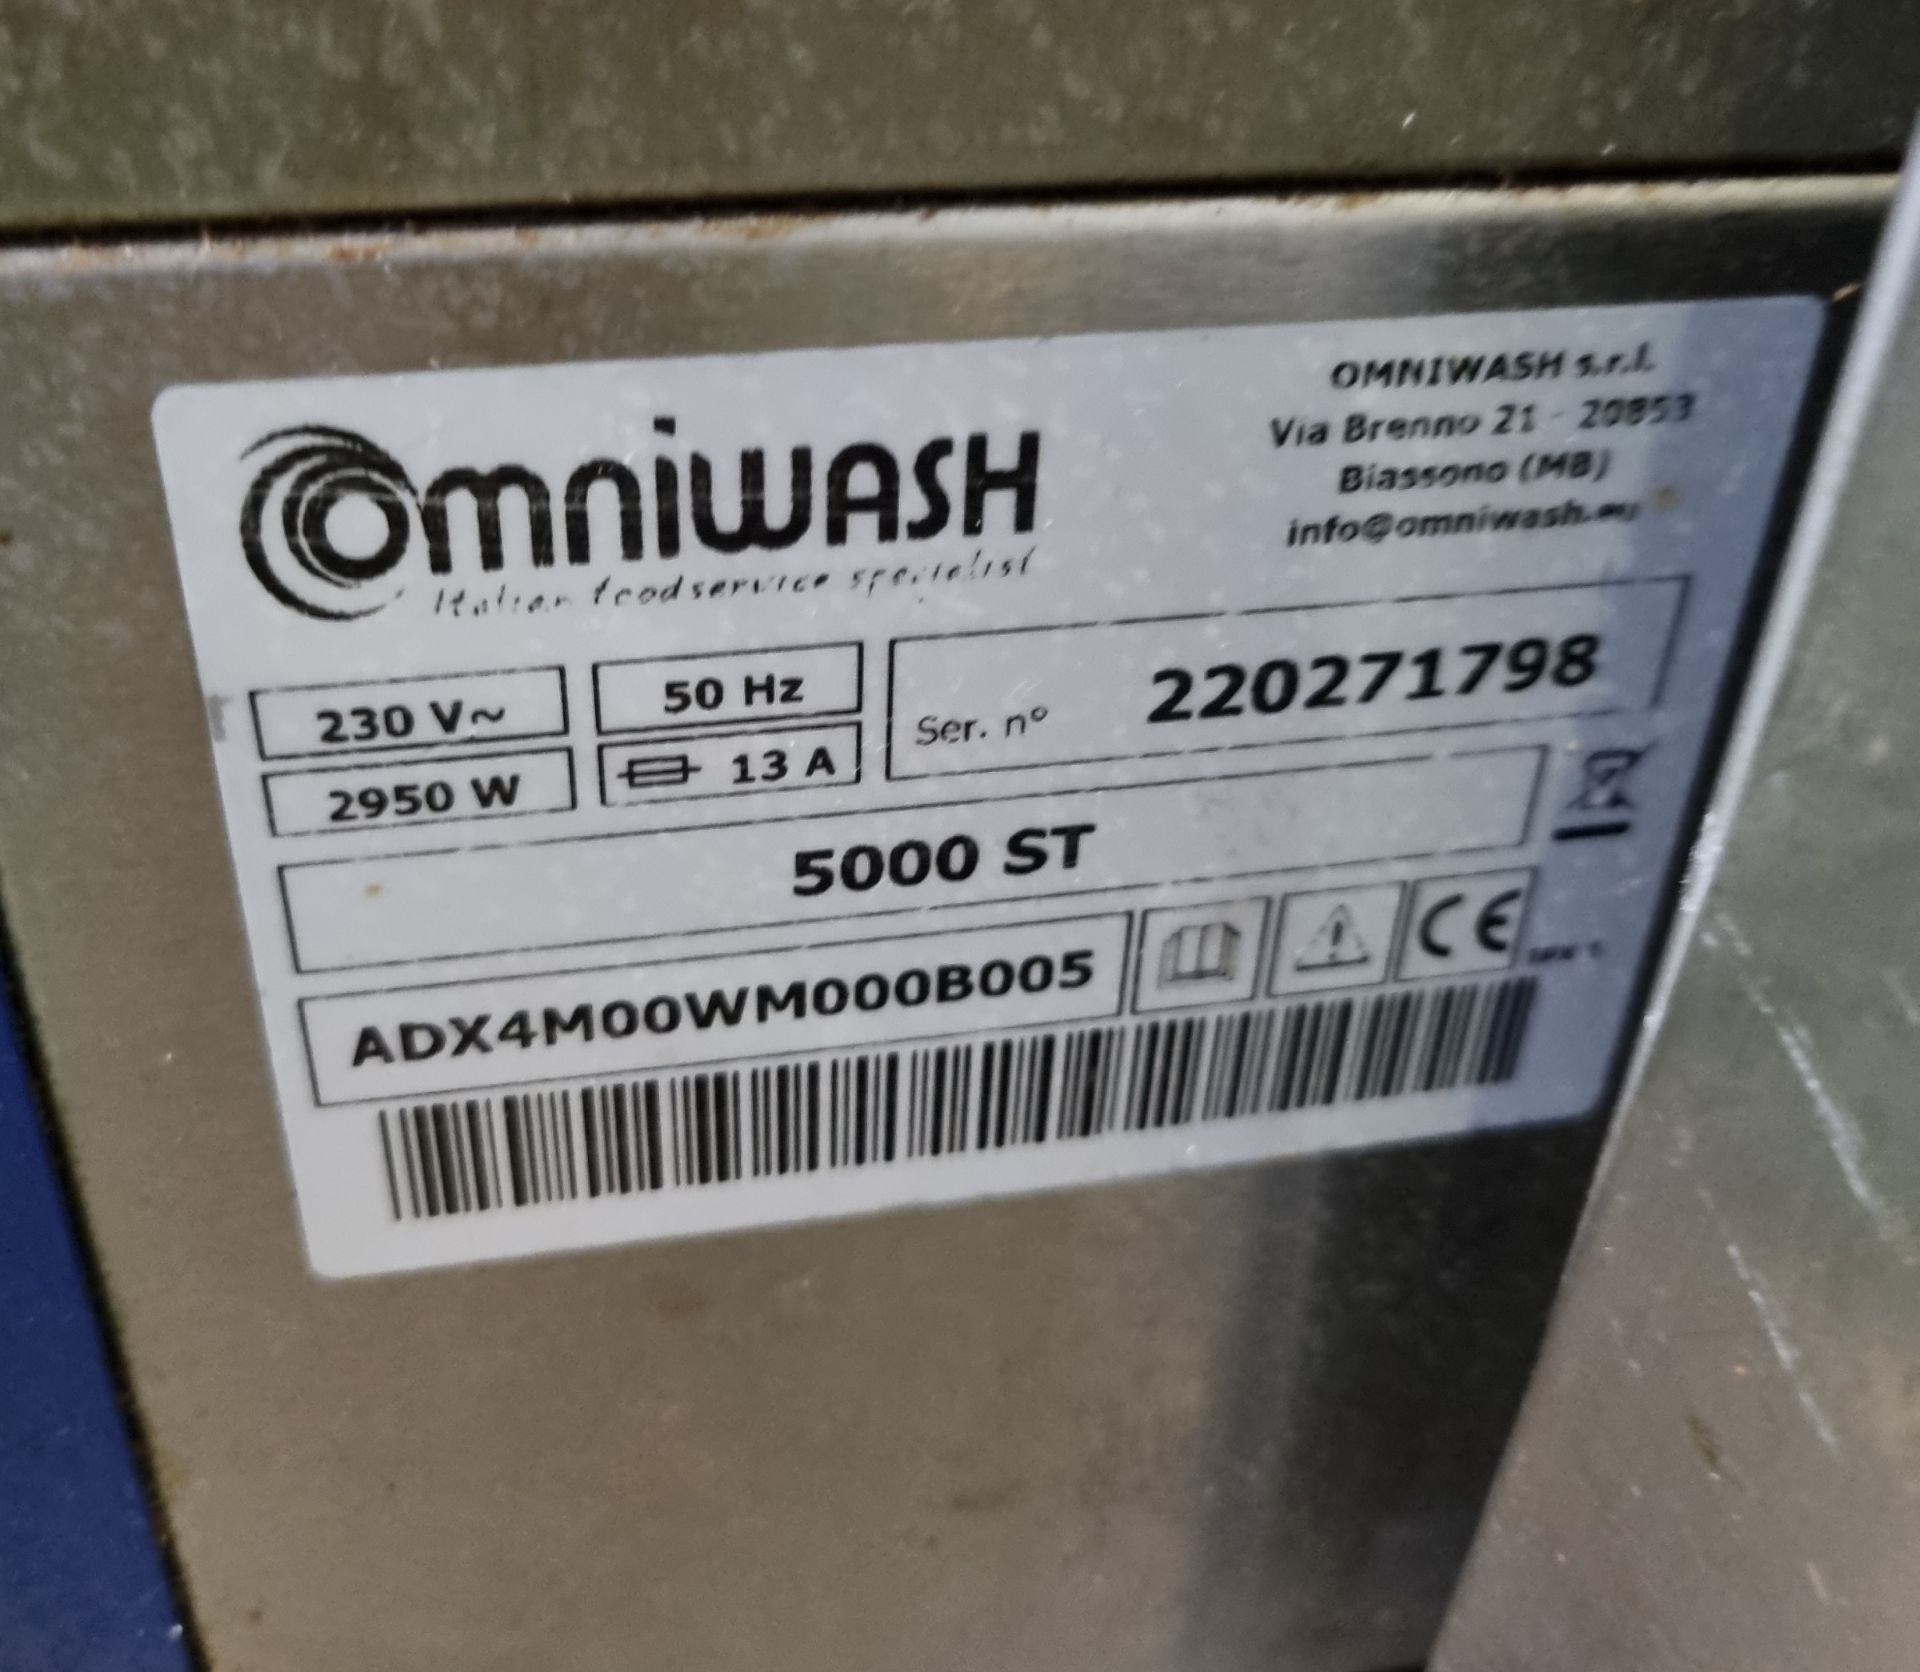 Adexa 5000ST dishwasher - L 600 x W 600 x H 820mm - Image 5 of 5